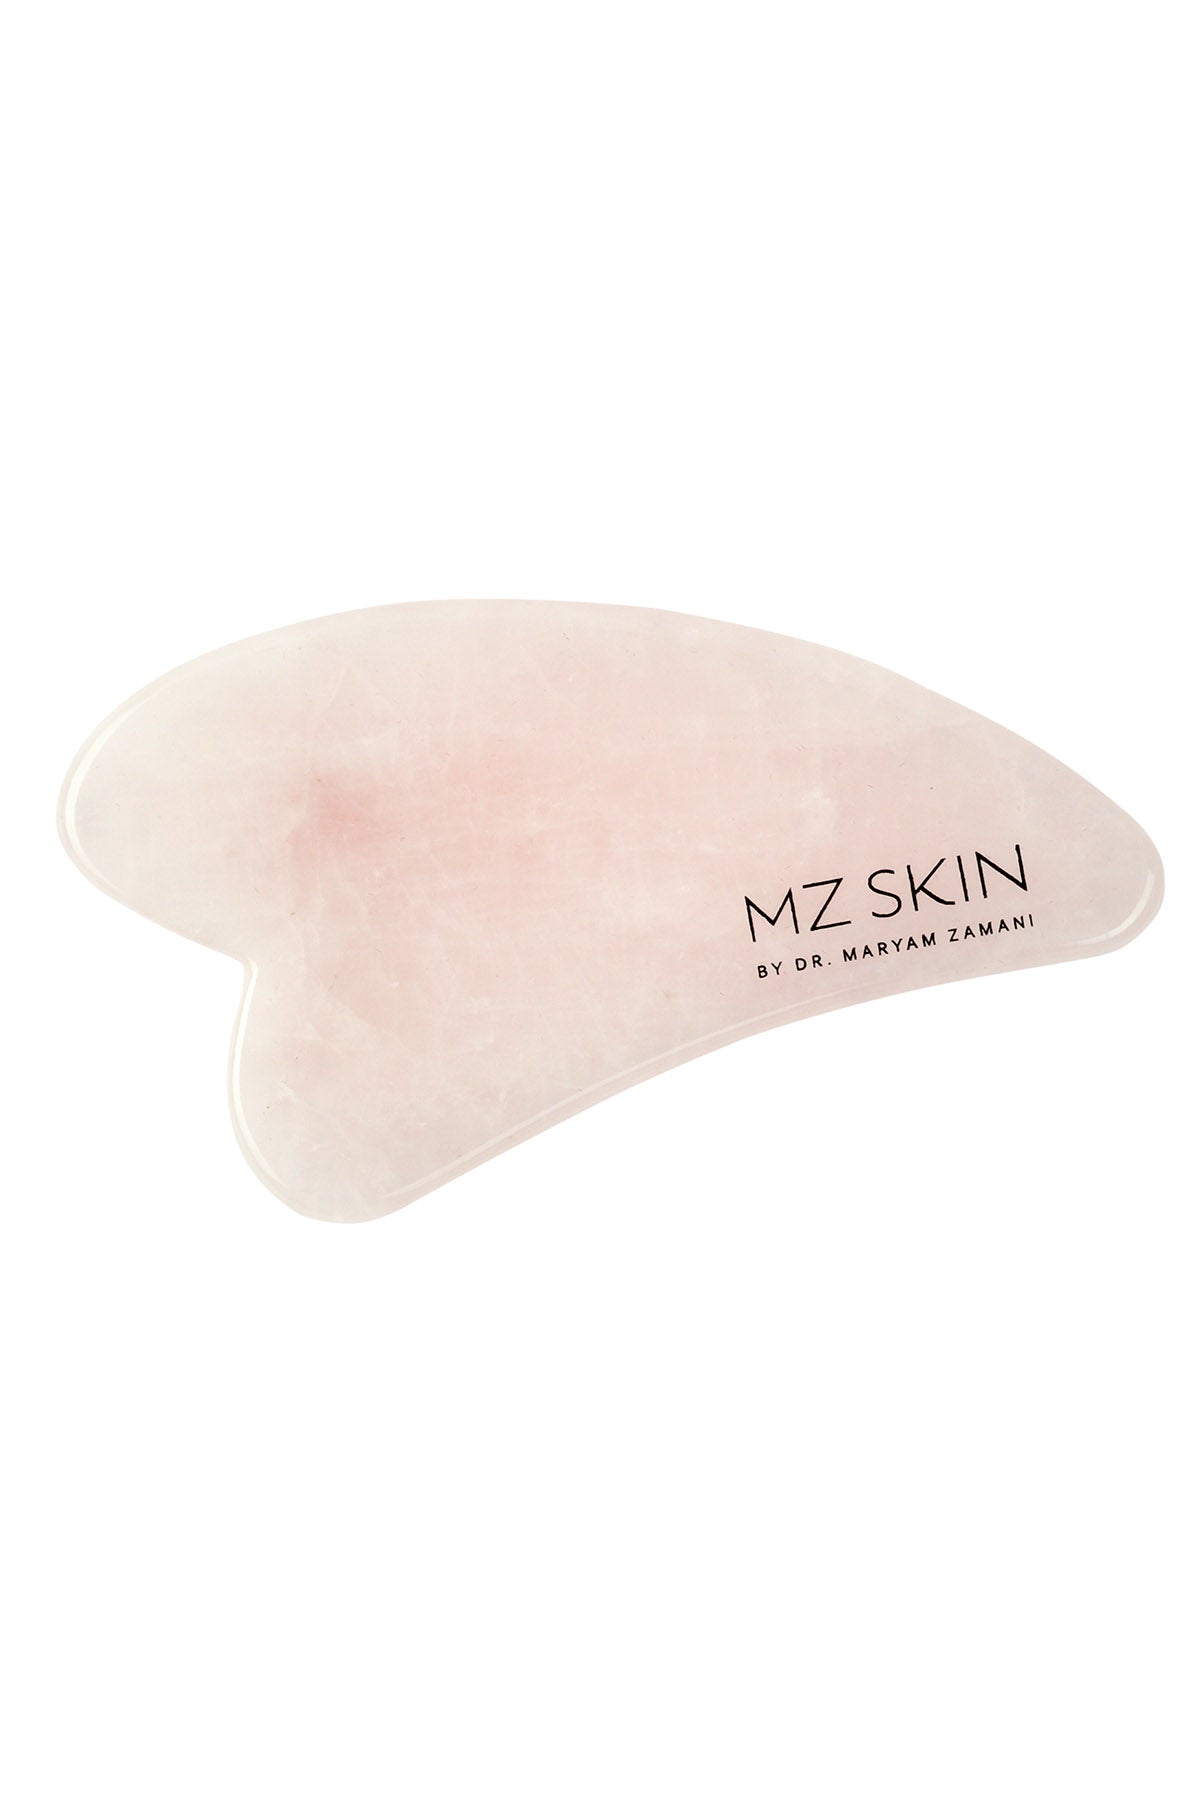 Mz skin instant radiance facial kit-2